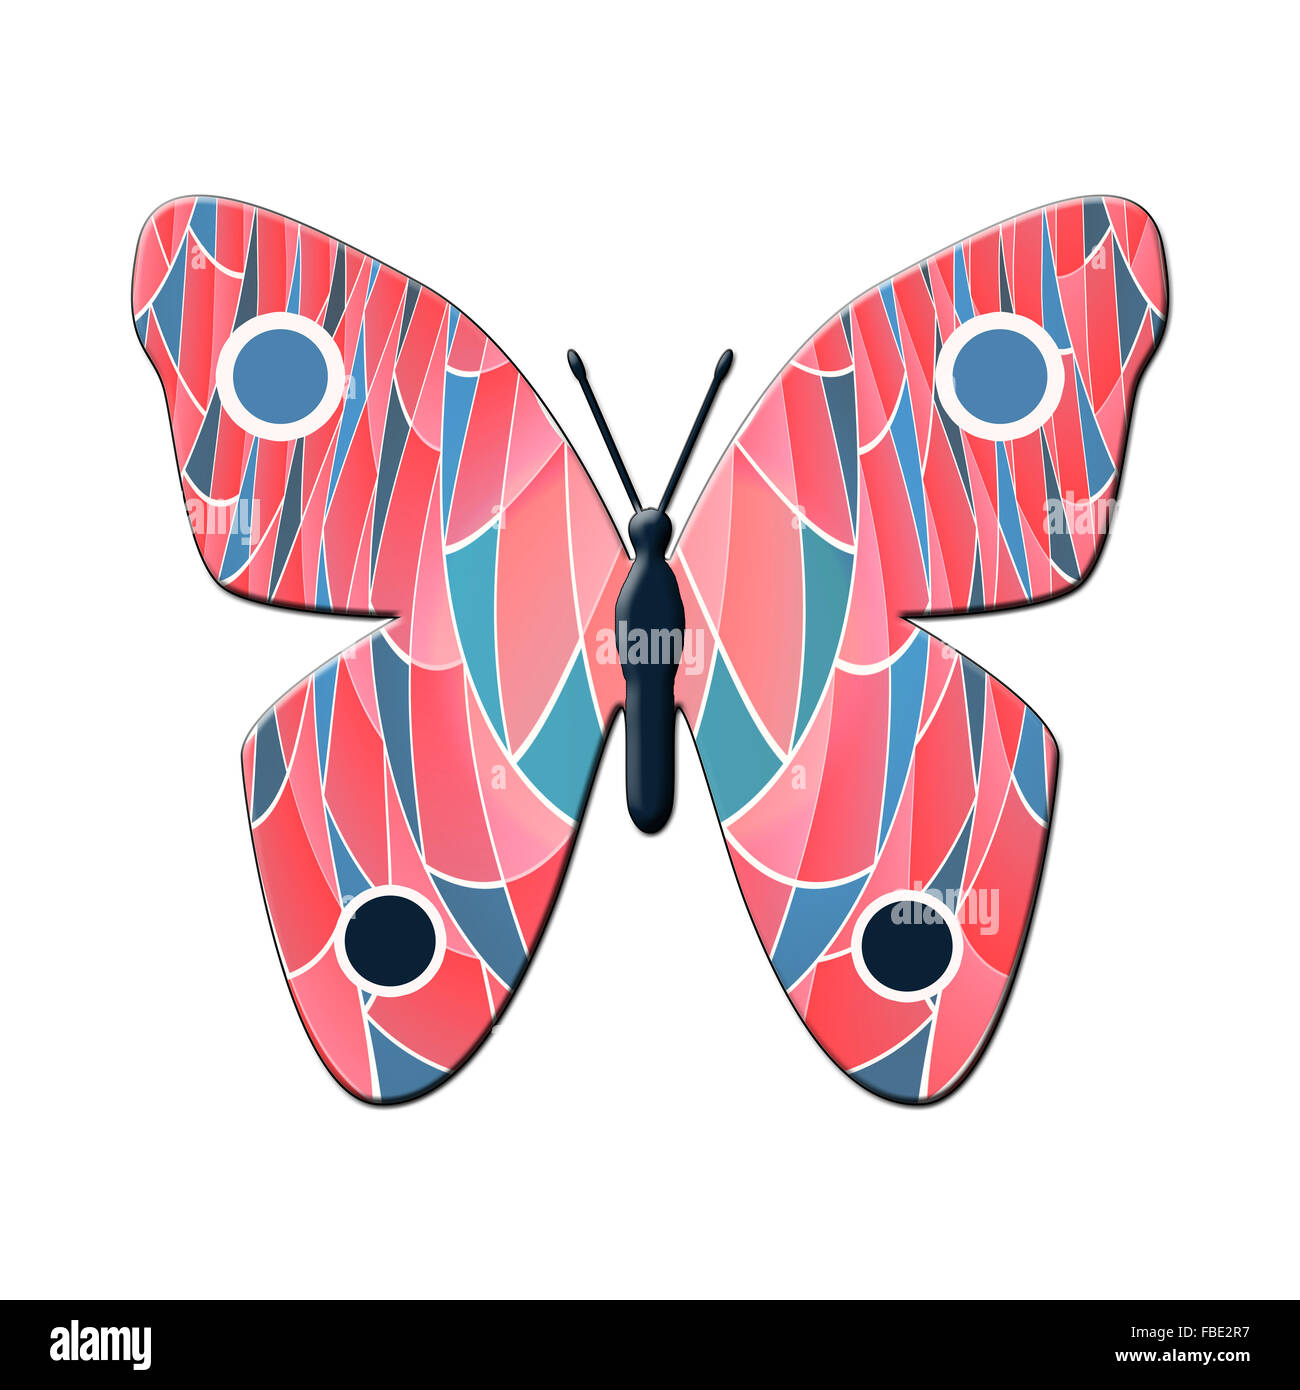 Digital art butterfly. Stock Photo